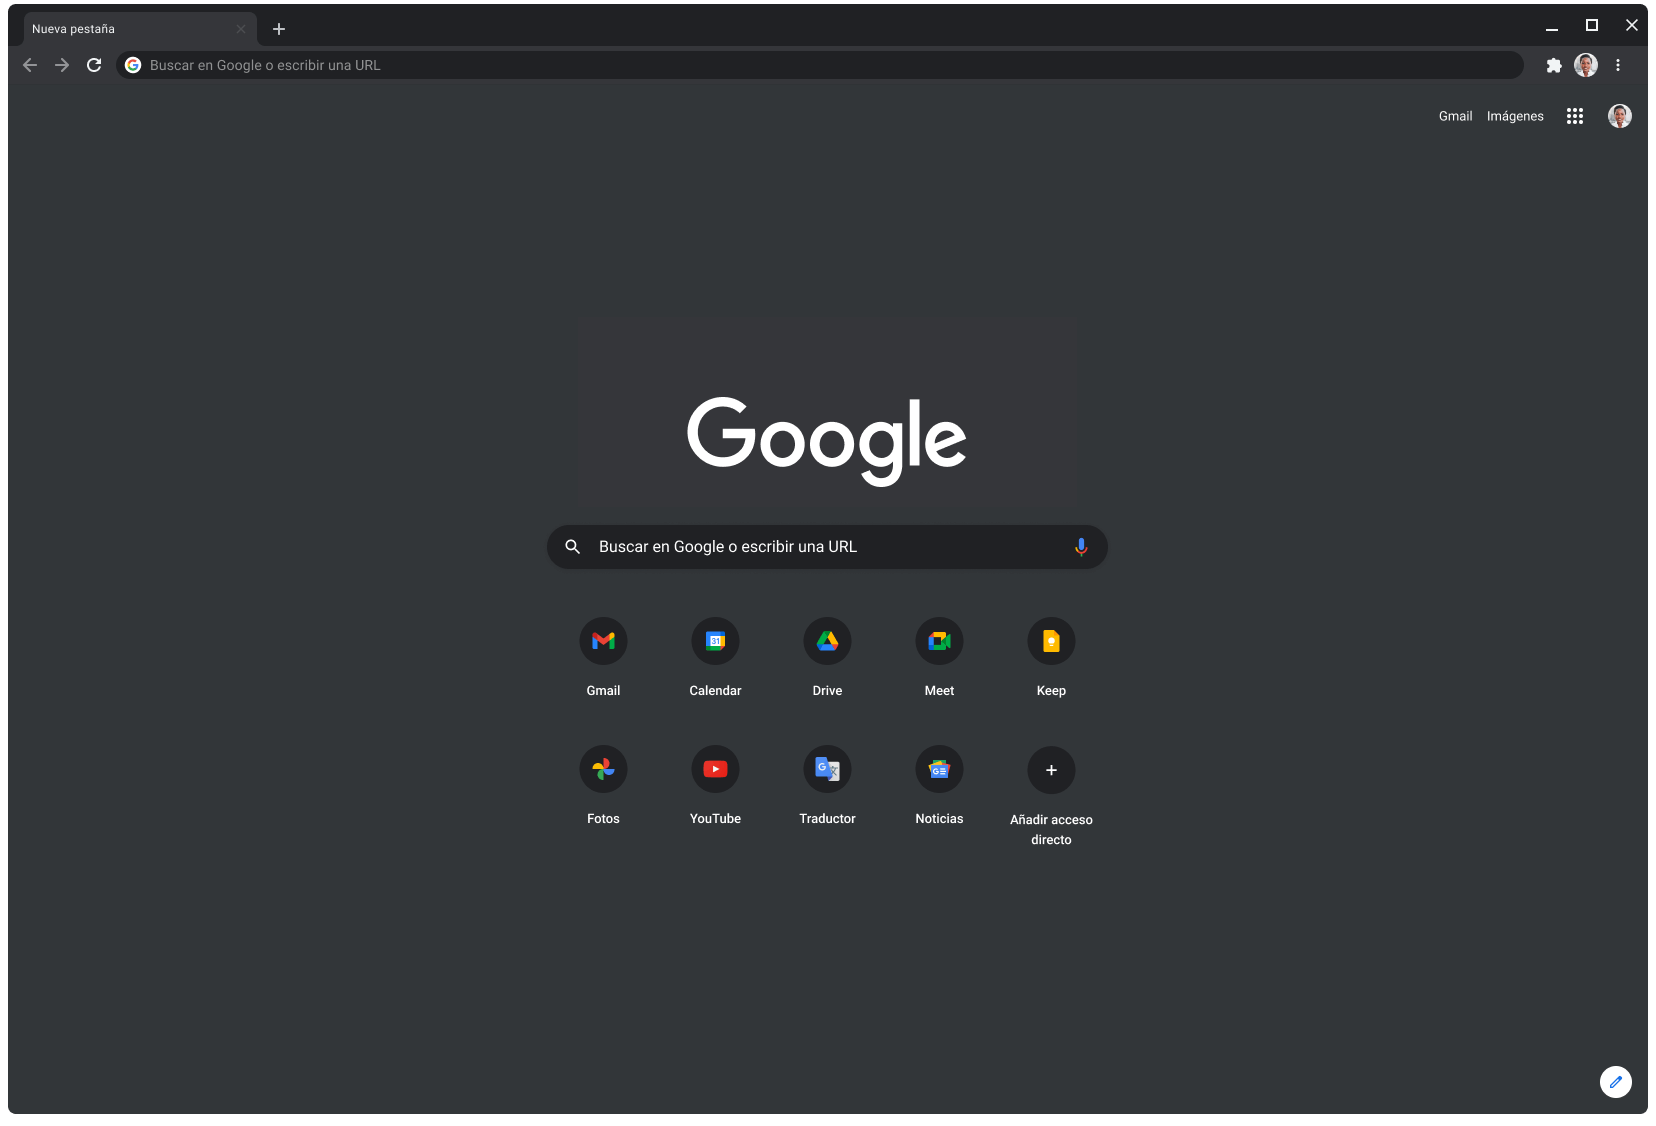 Ventana del navegador Chrome en modo oscuro donde se muestra Google.com.